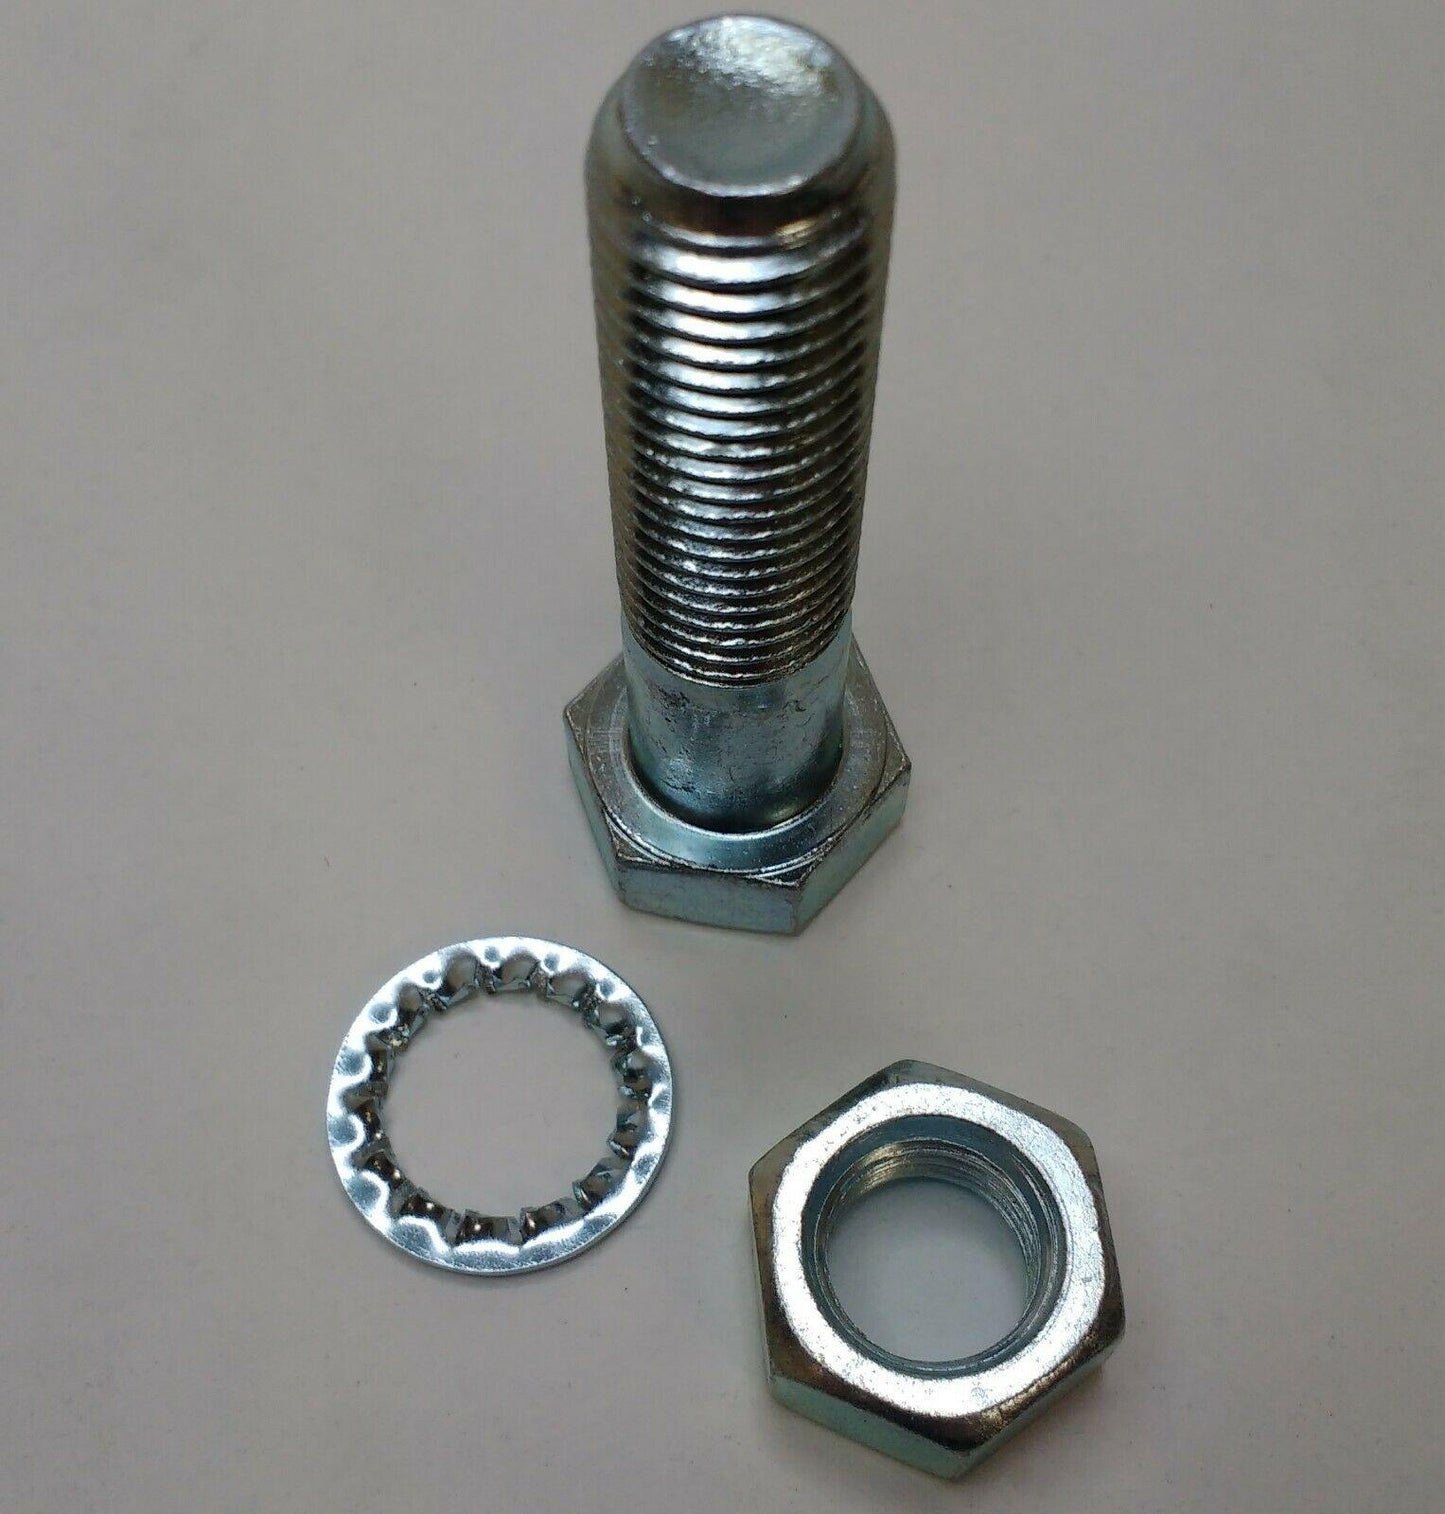 2 X High Tensile Zinc Plated (8.8) Towball Nuts & Bolts M16 X 65Mm Maypole Mp248 - Mid-Ulster Rotating Electrics Ltd